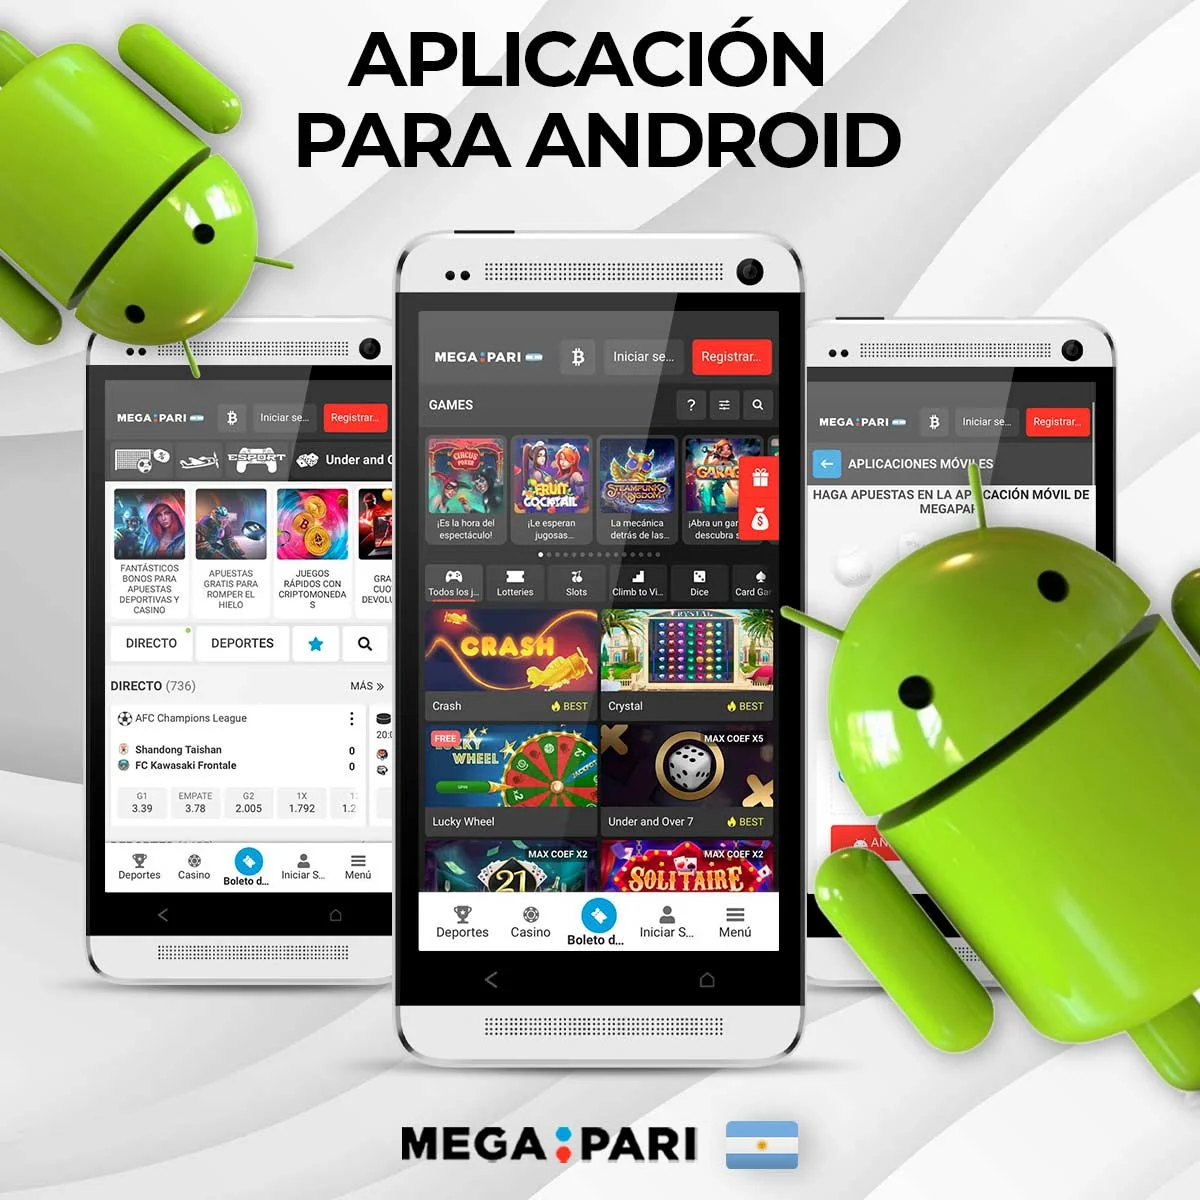 Guía paso a paso para descargar e instalar la aplicación Megapari en android